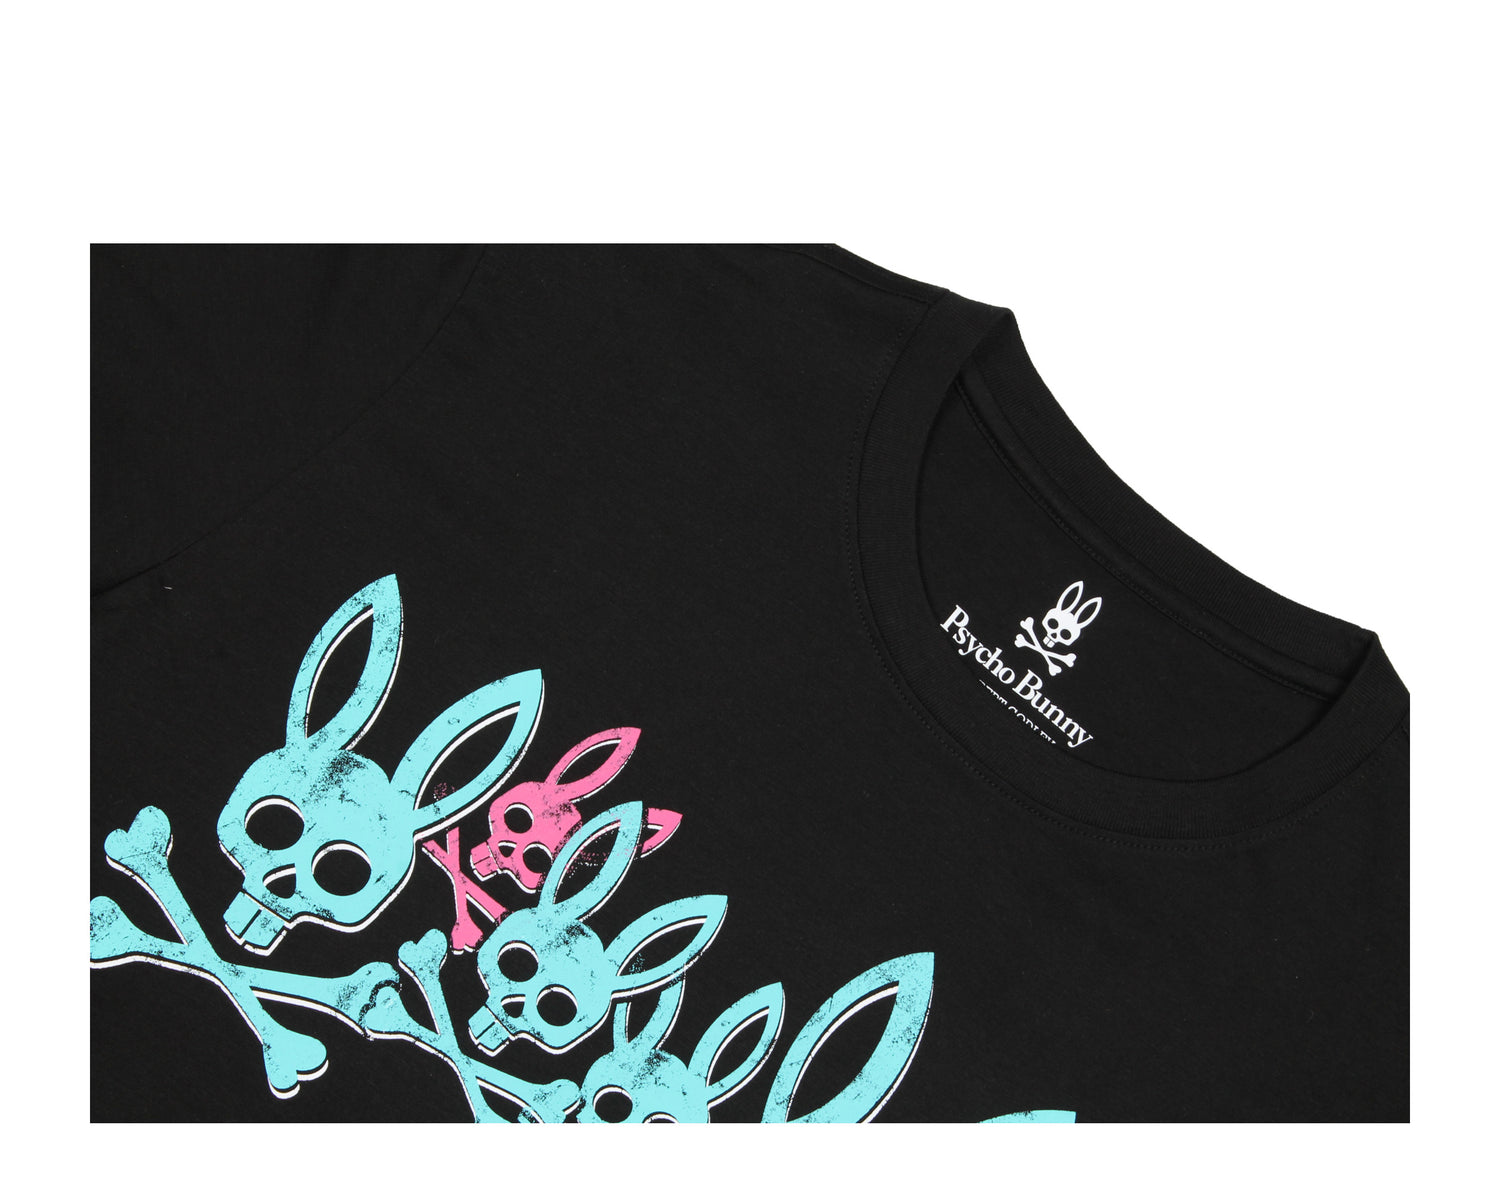 Psycho Bunny Printed Graphic Men's Tee Shirt